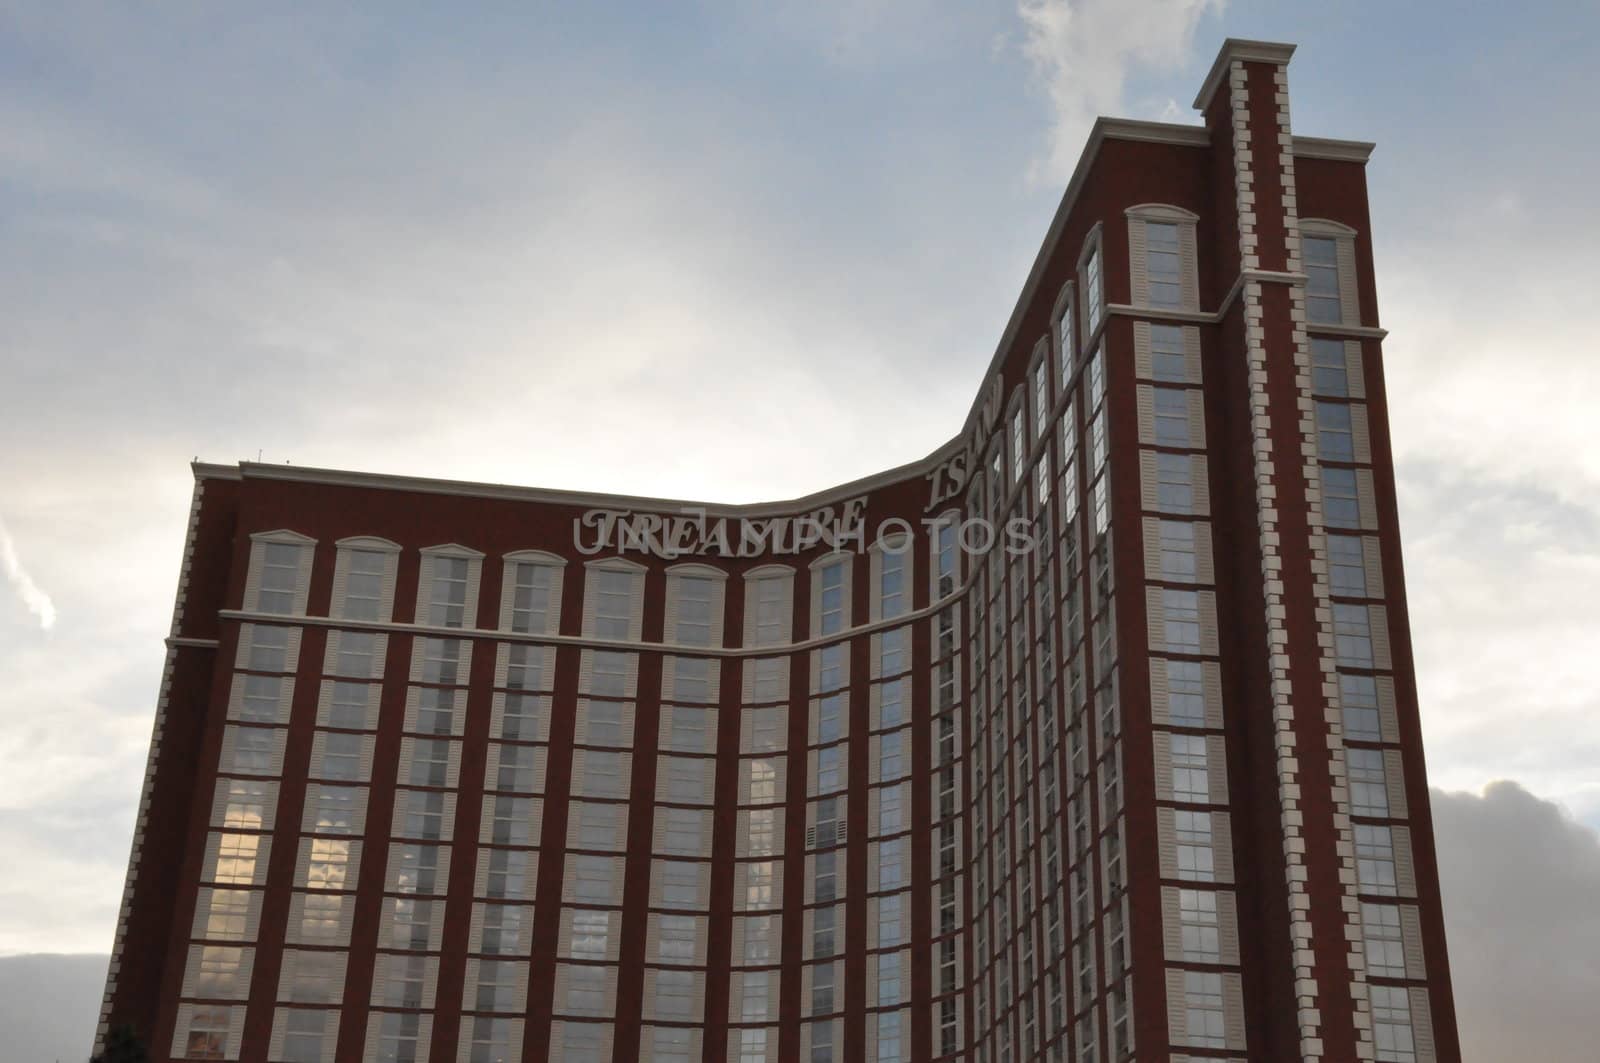 Treasure Island Hotel and Casino in Las Vegas by sainaniritu